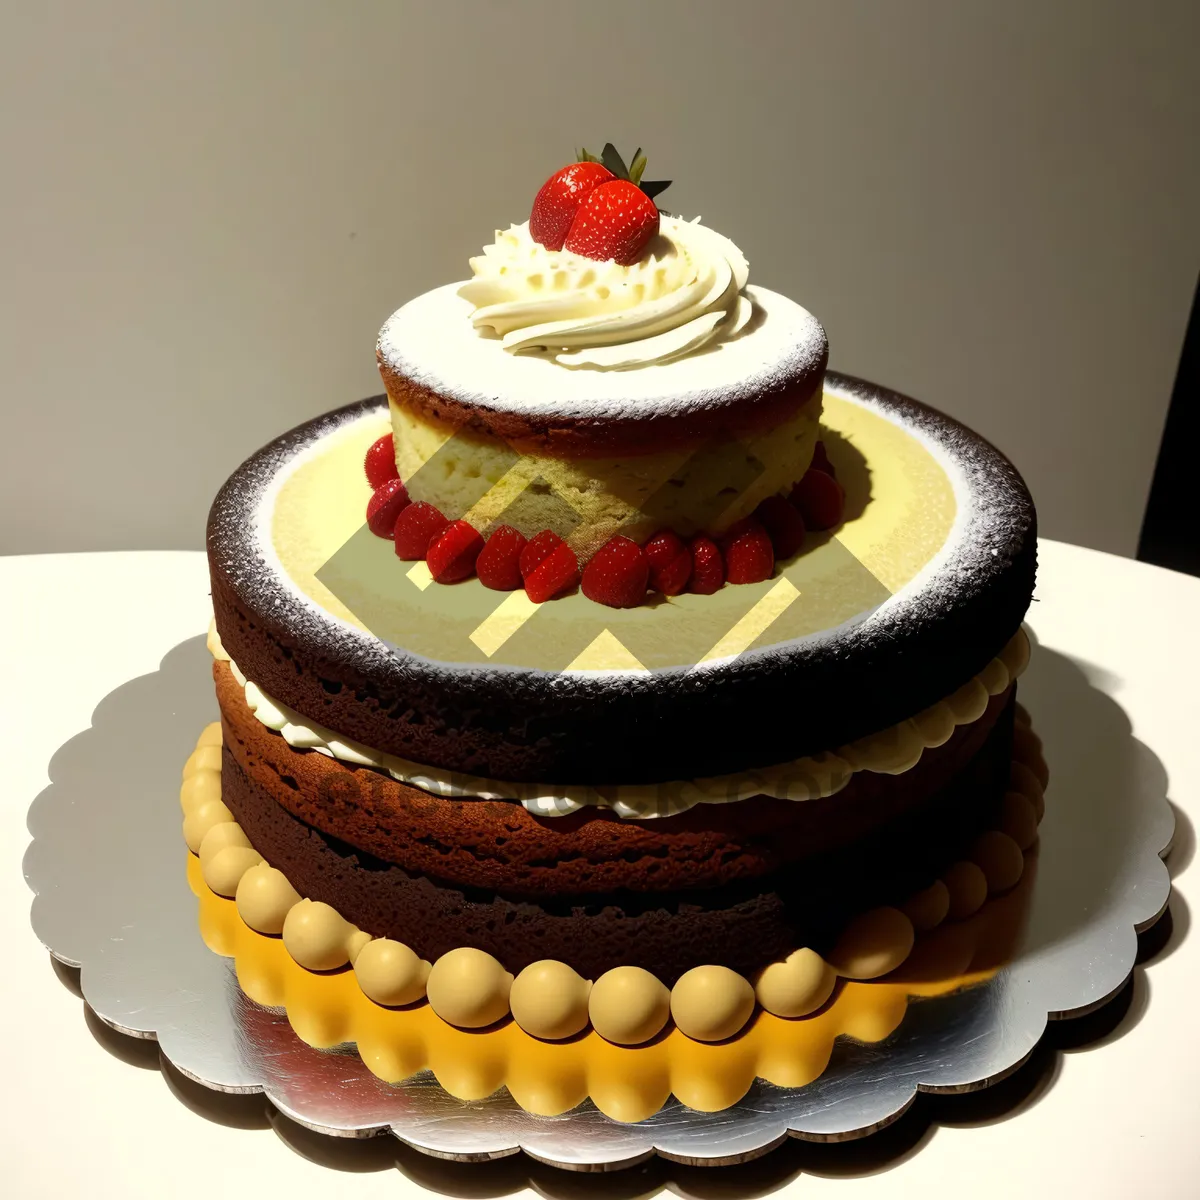 Picture of Delicious Strawberry Cream Cake - Sweet & Fresh Gourmet Dessert